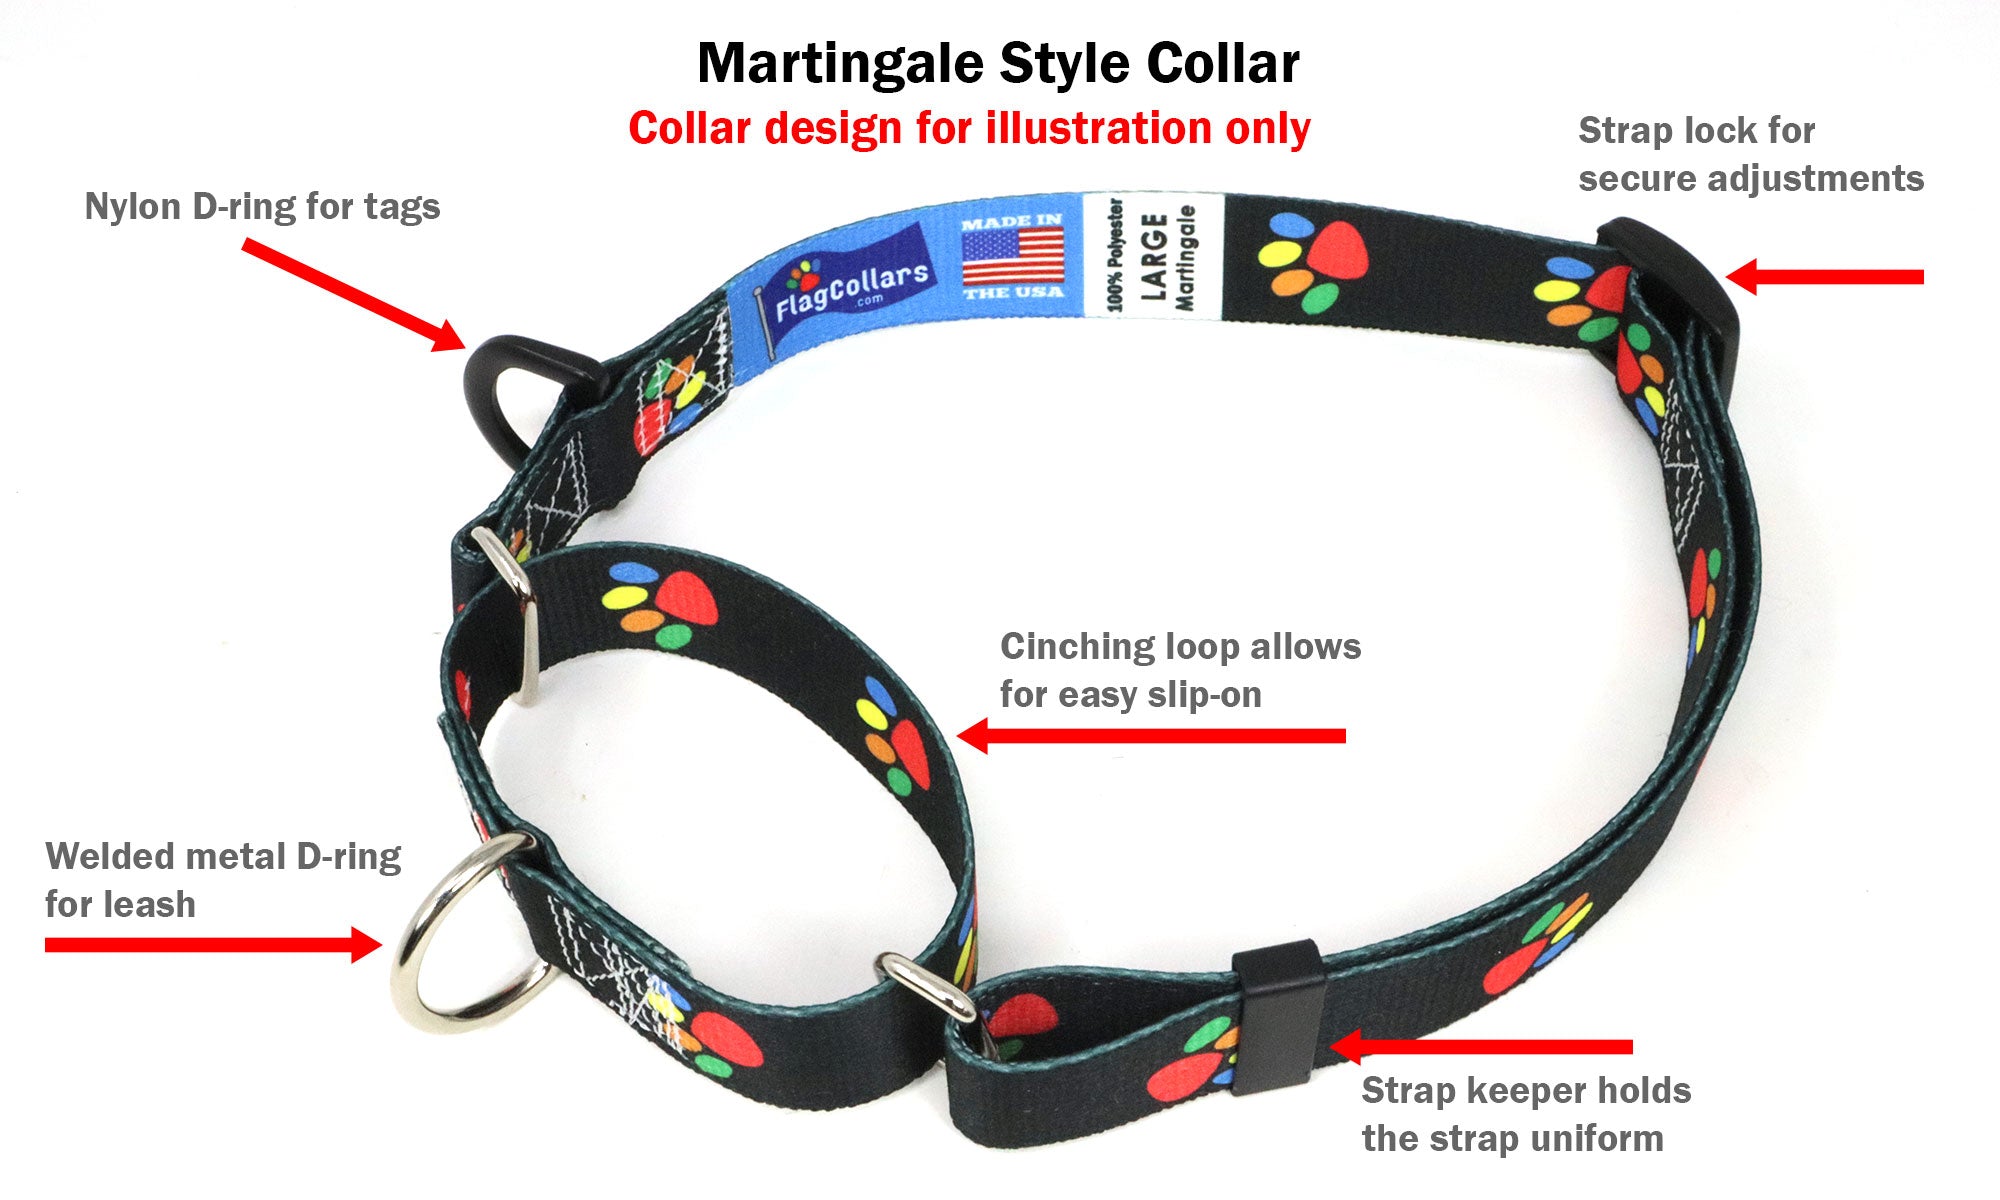 Kiribati Dog Collar | Quick Release or Martingale Style | Made in NJ, USA